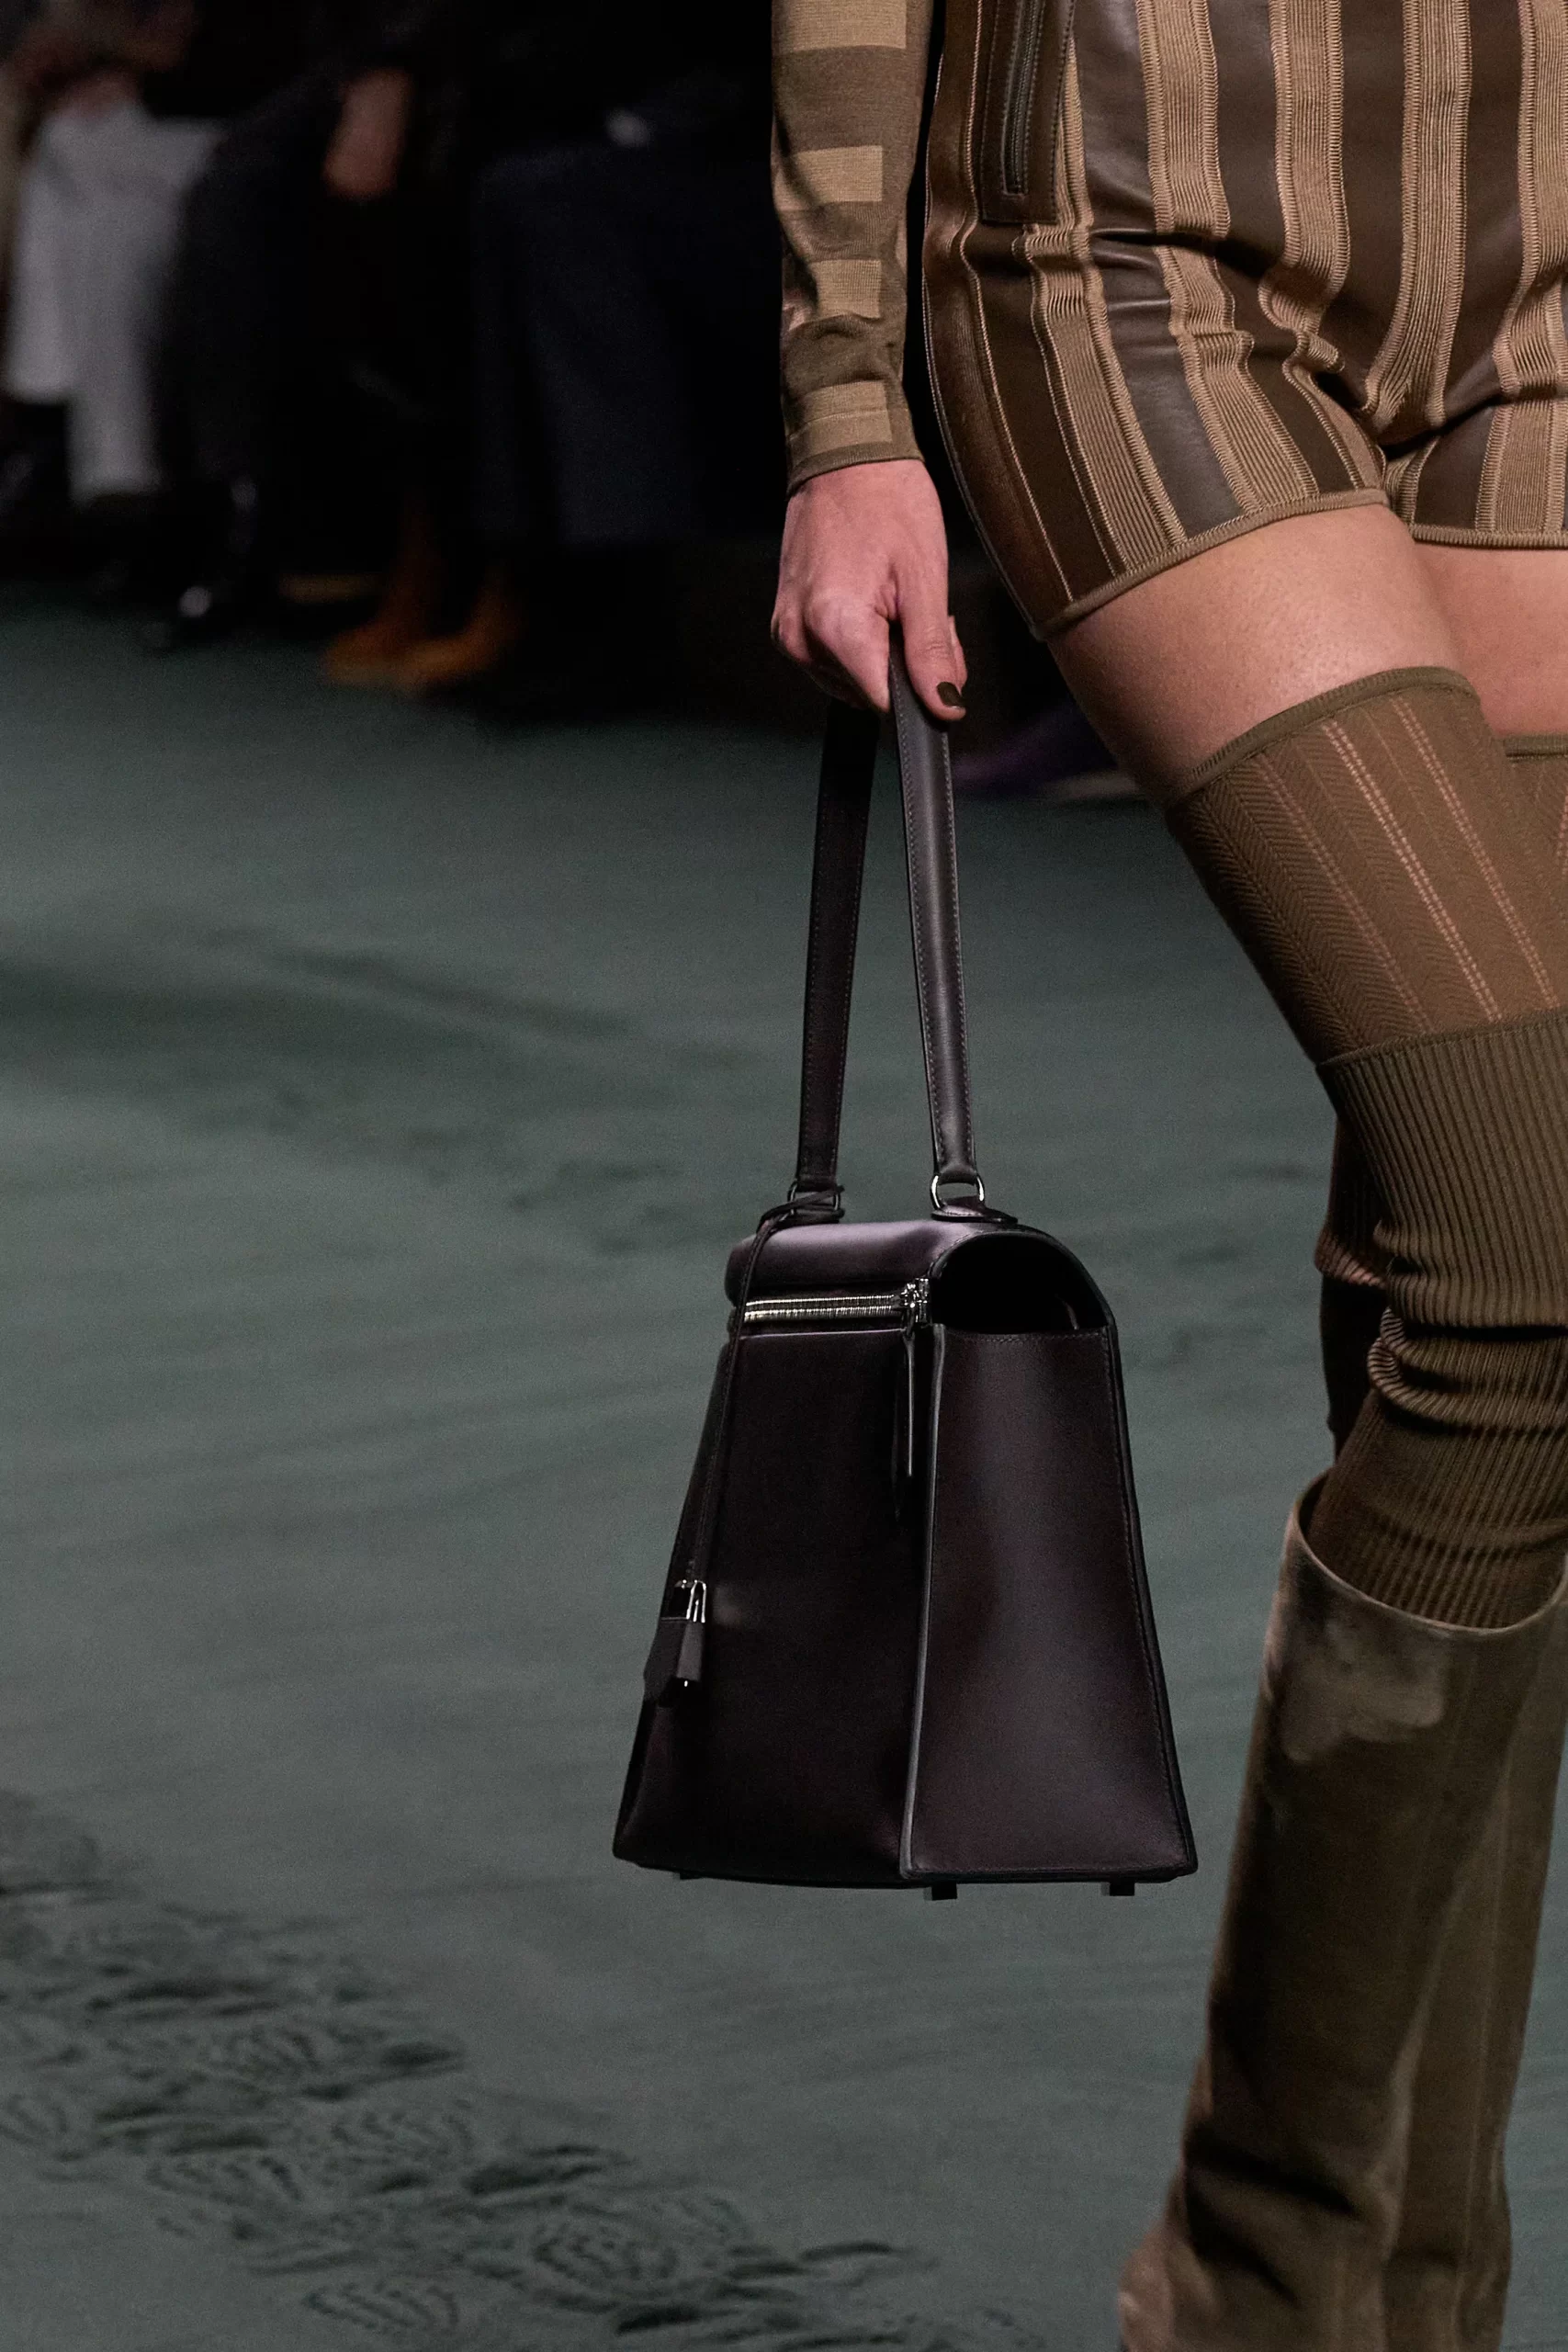 The New Hermès Kelly Messenger Bag is Here - PurseBop